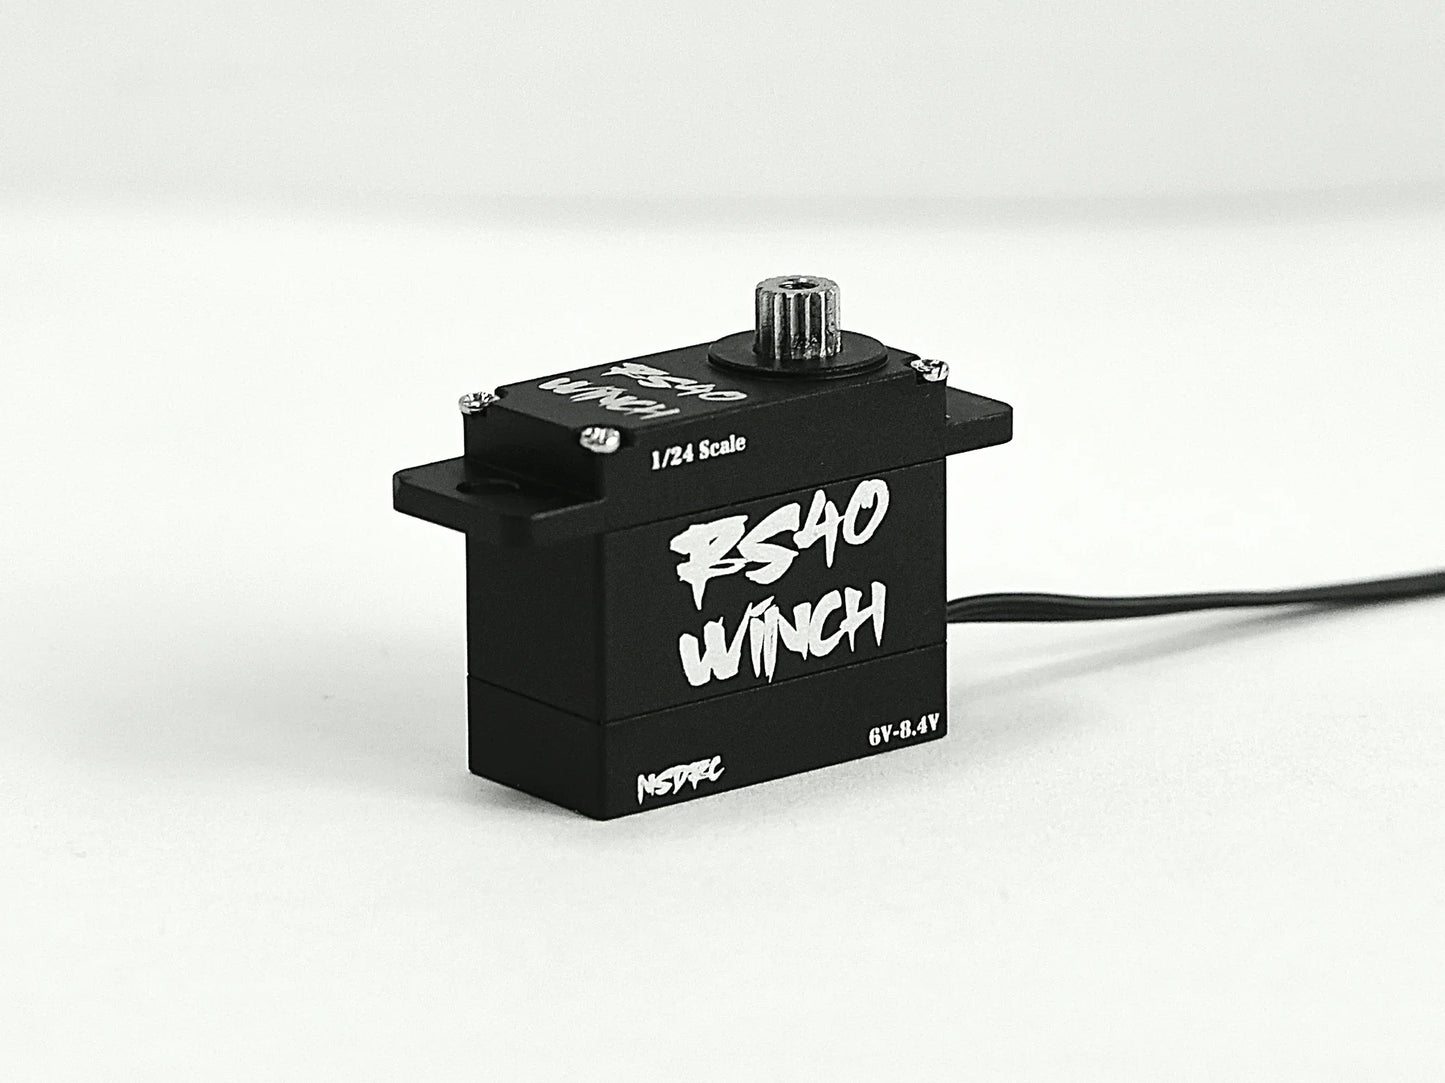 NSDRC RS40 Nano Winch